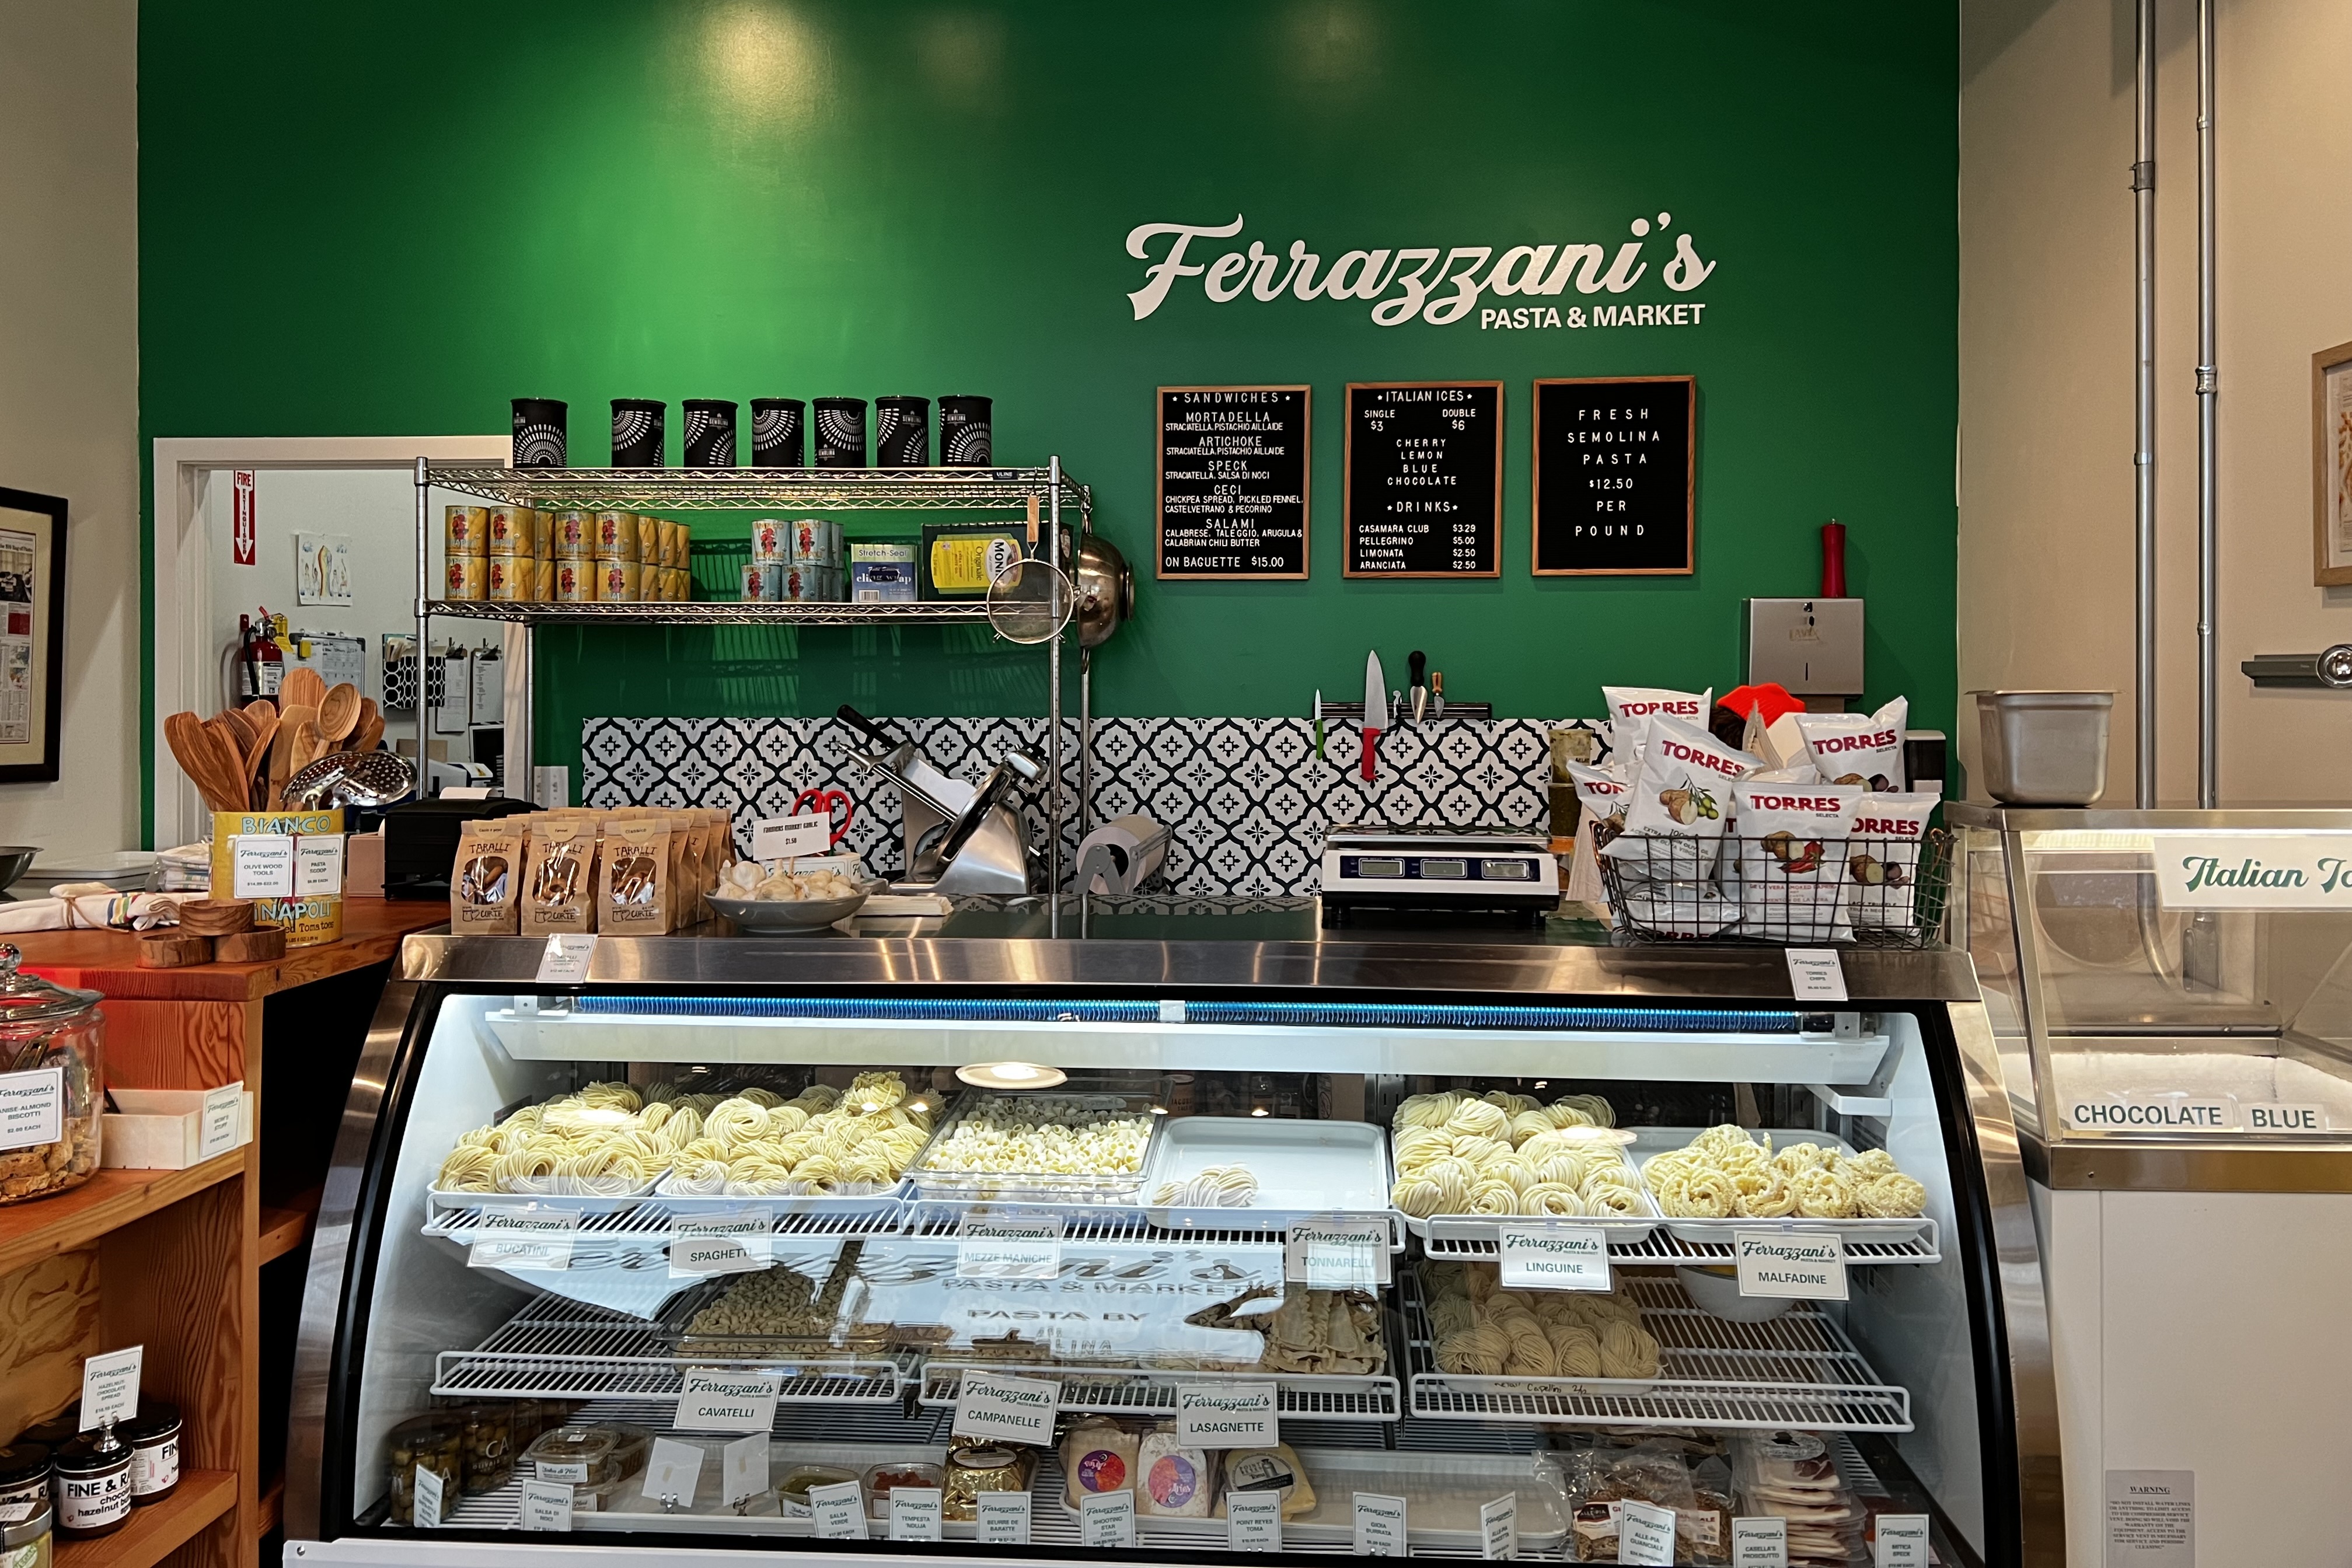 Inside Ferrazzani’s Pasta &amp; Market in Pasadena.